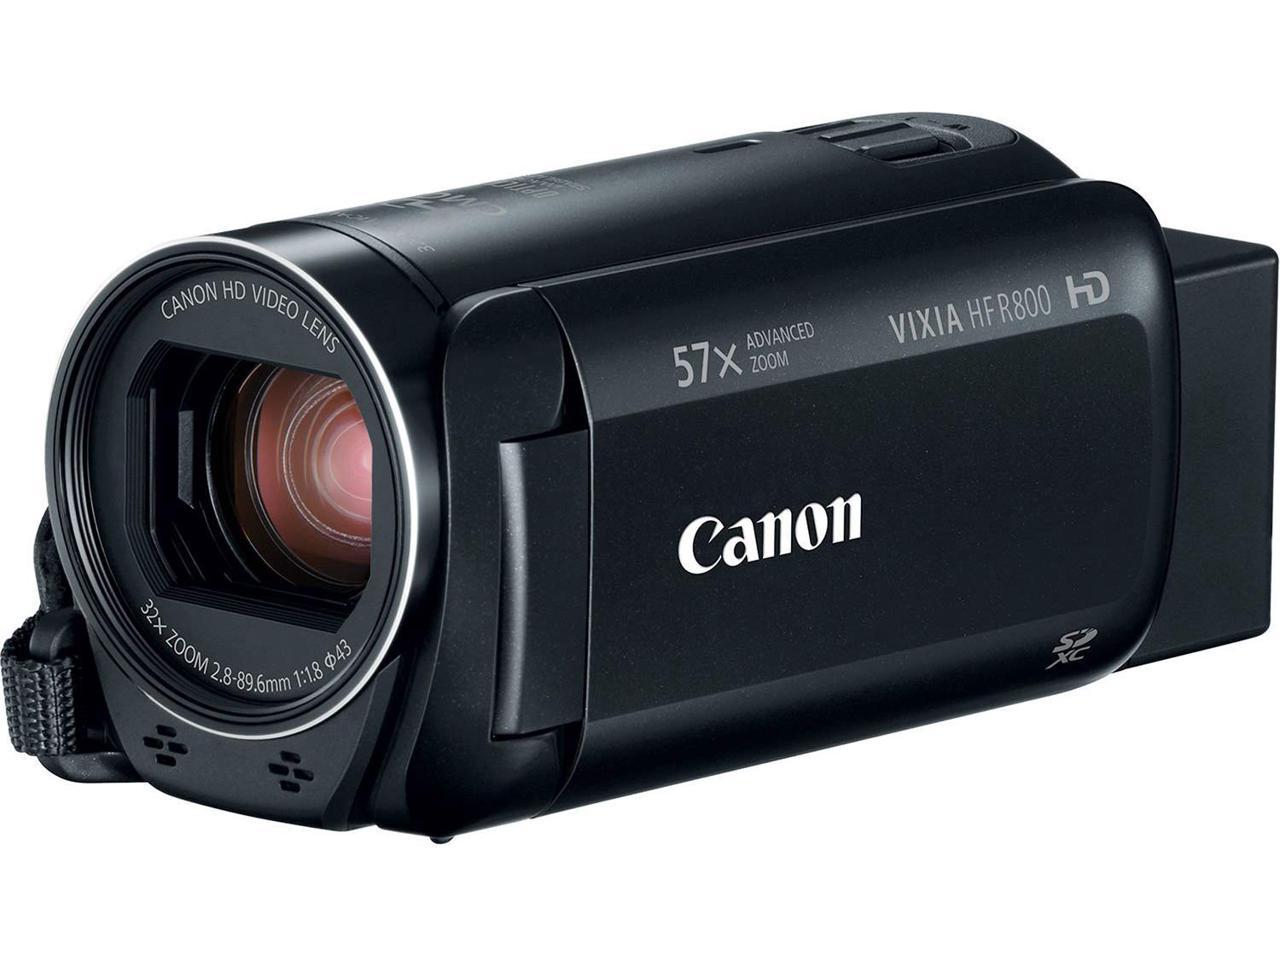 Canon HF R800 Camcorder - Black